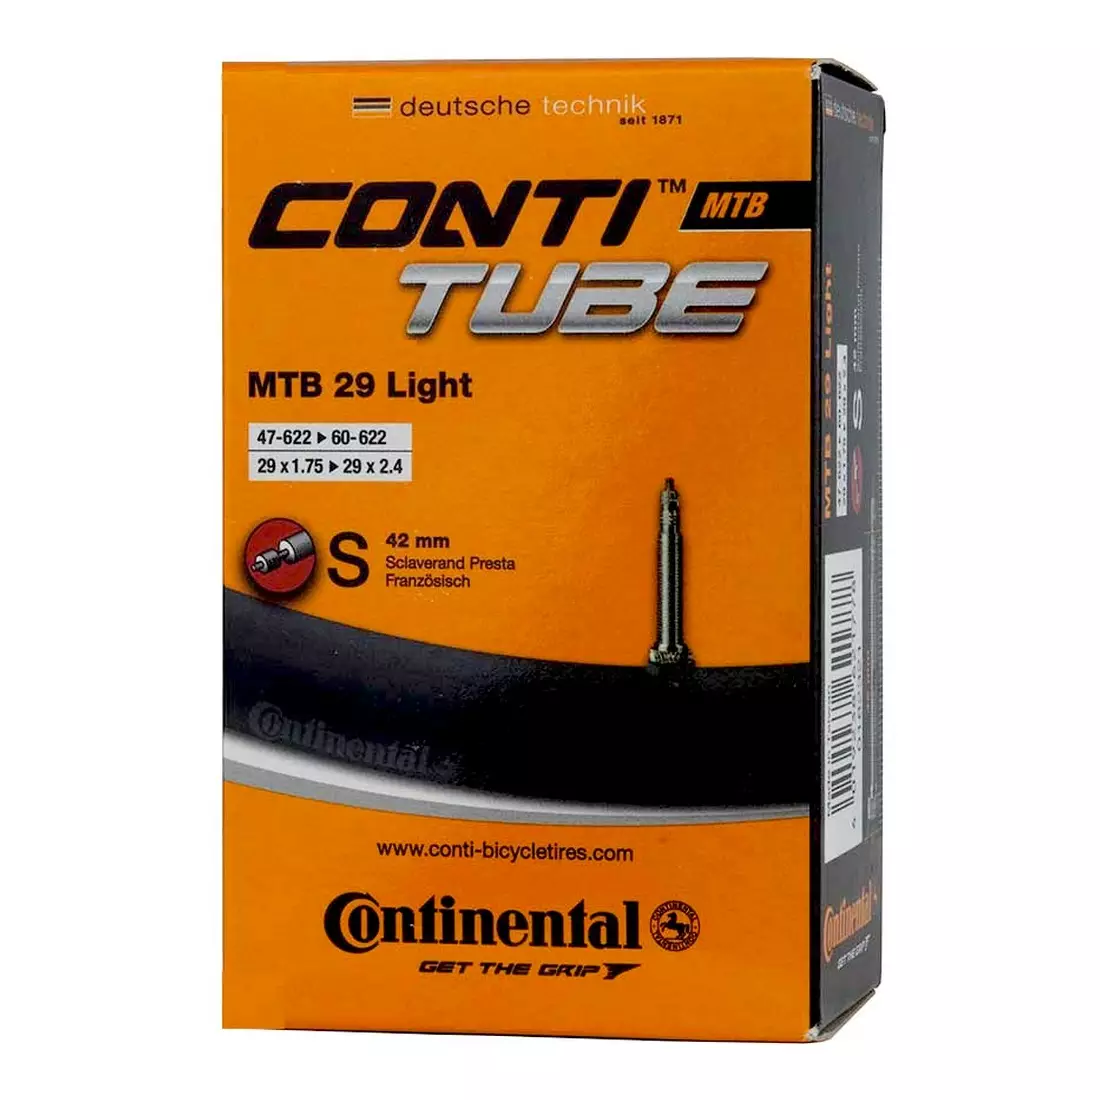 CONTINENTAL SS18 bicycle inner tube MTB 28/29 Light presta 60mm 47-662/62-662 28/29x1.75-28/29x2.4